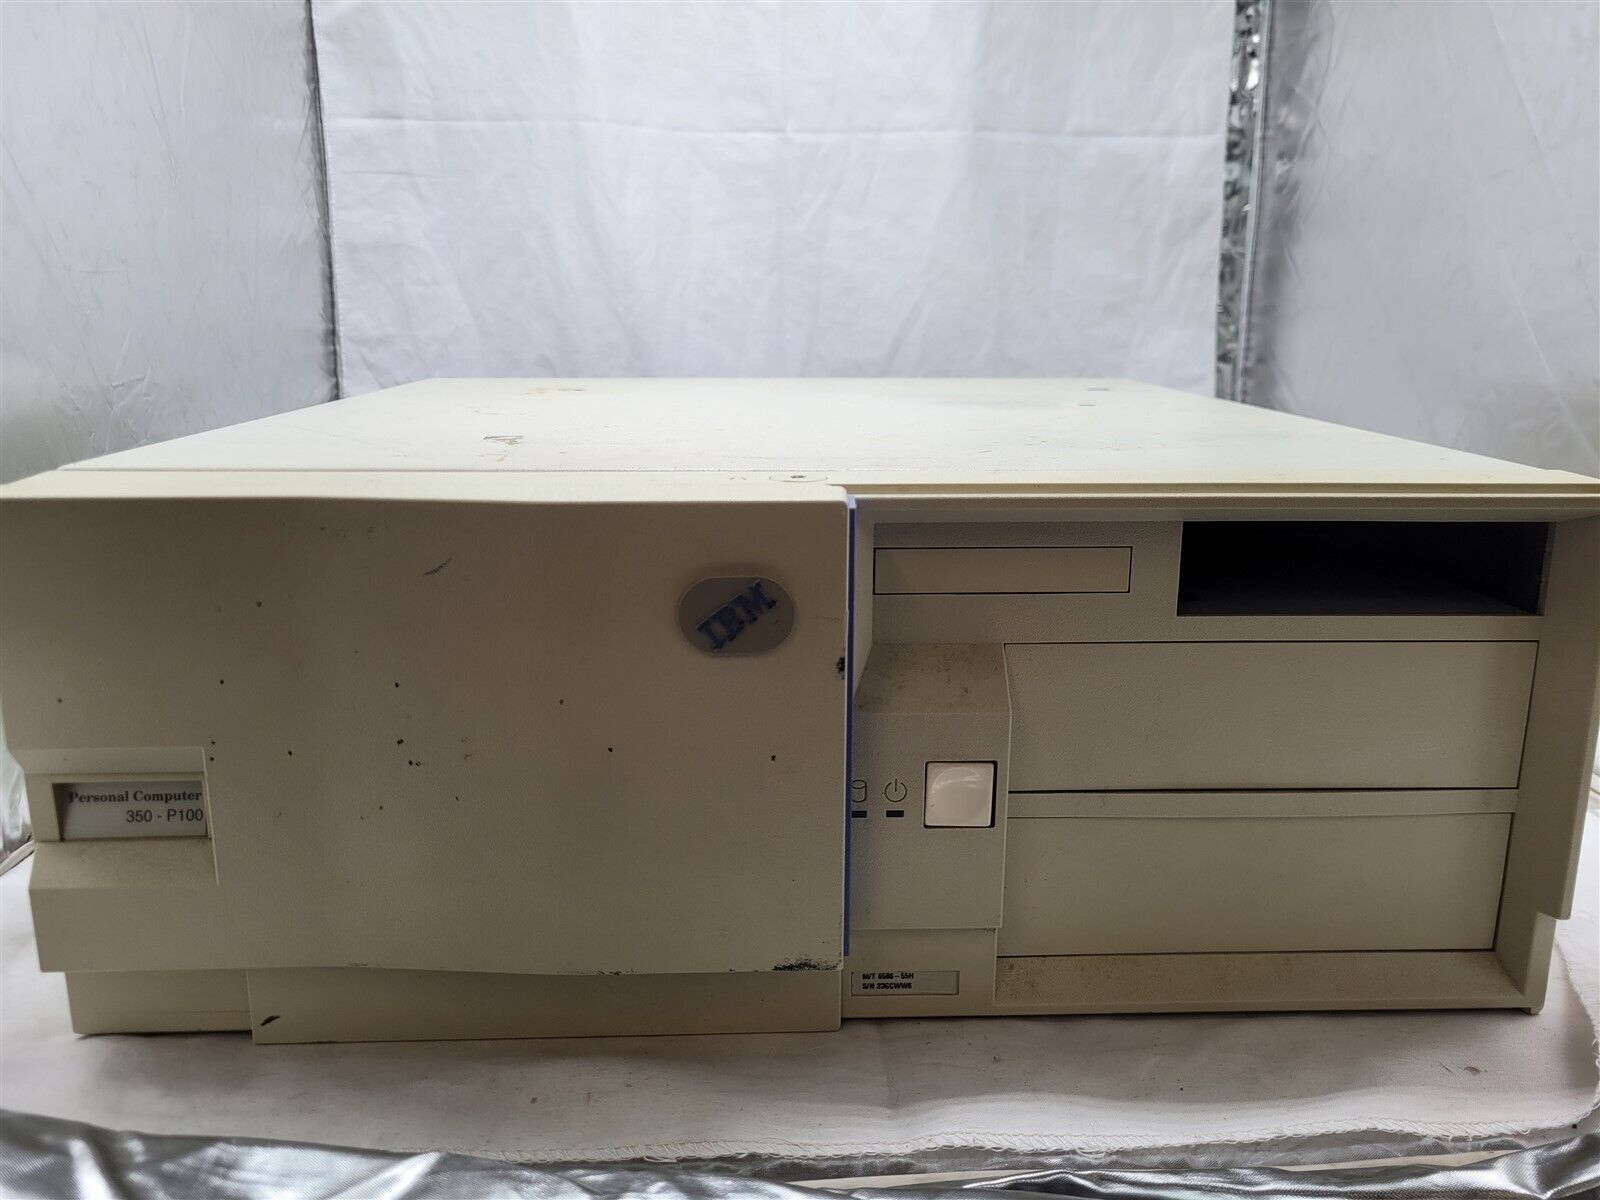 Vintage IBM 350-P100 Personal Computer Pentium 100MHZ 64MB RAM POWER TESTED